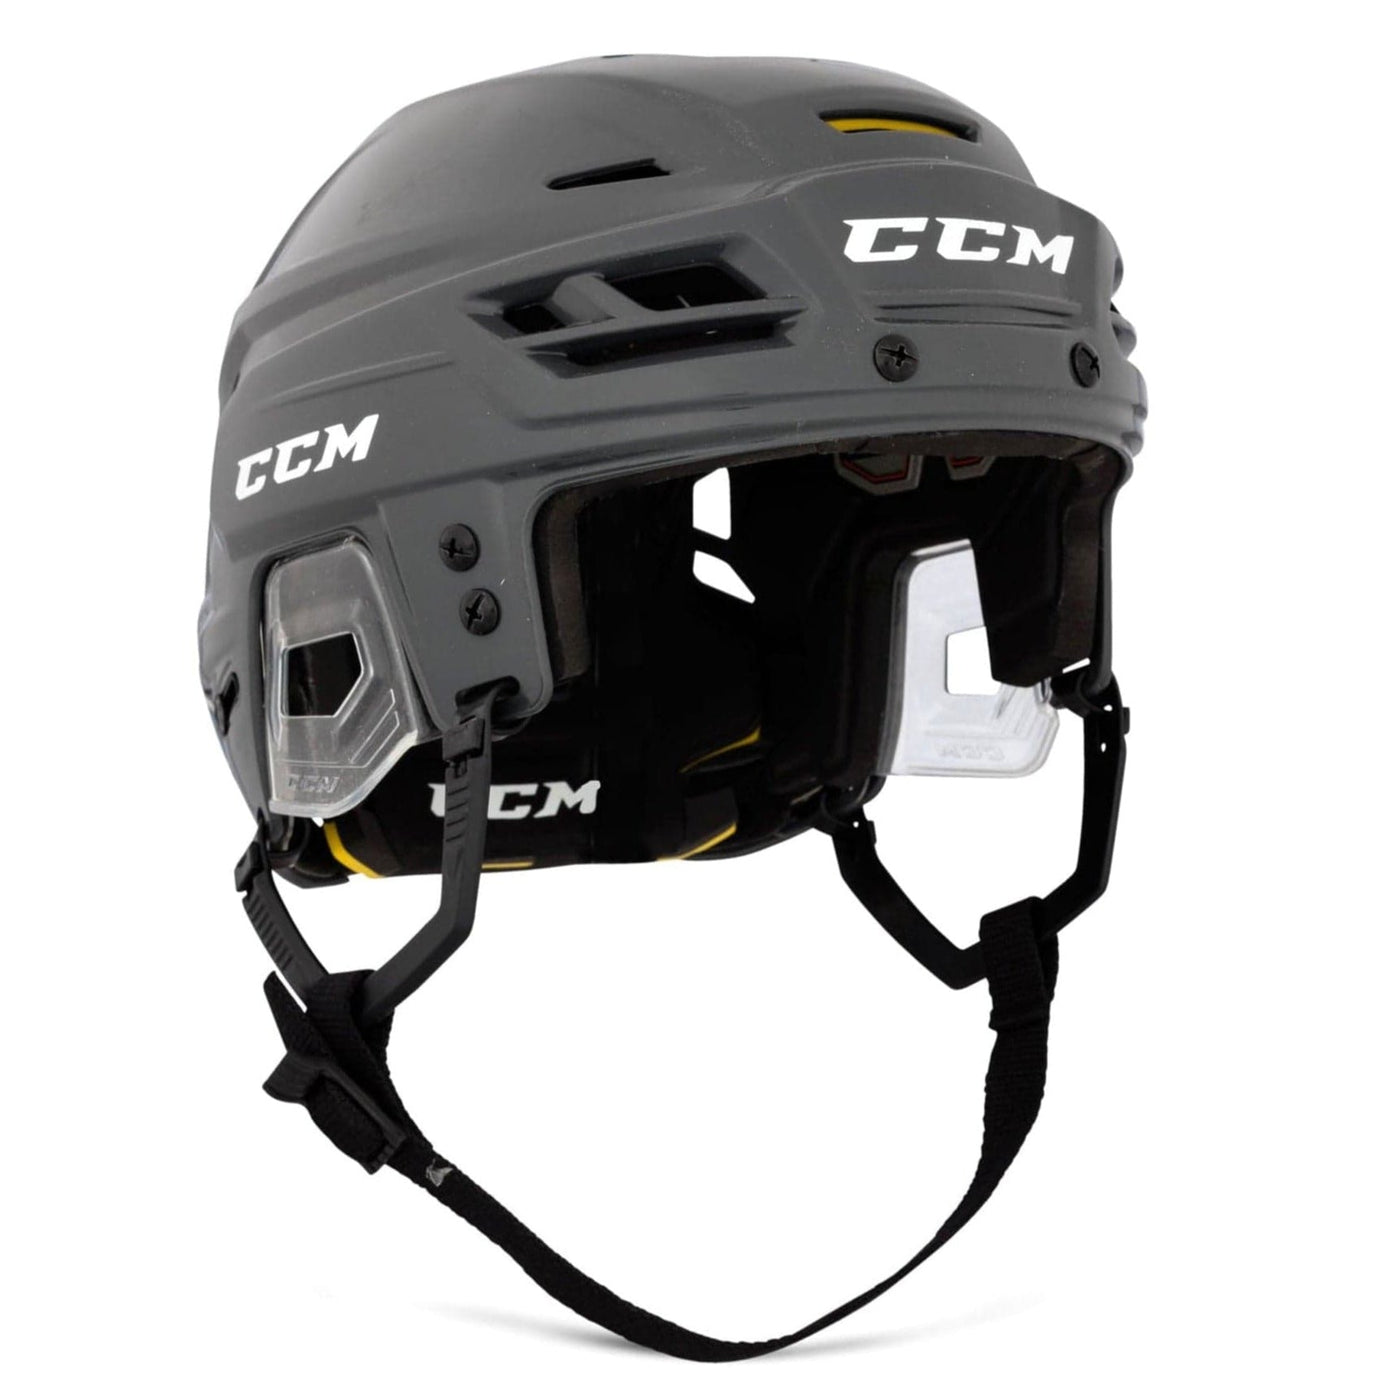 CCM Tacks 310 Hockey Helmet - The Hockey Shop Source For Sports